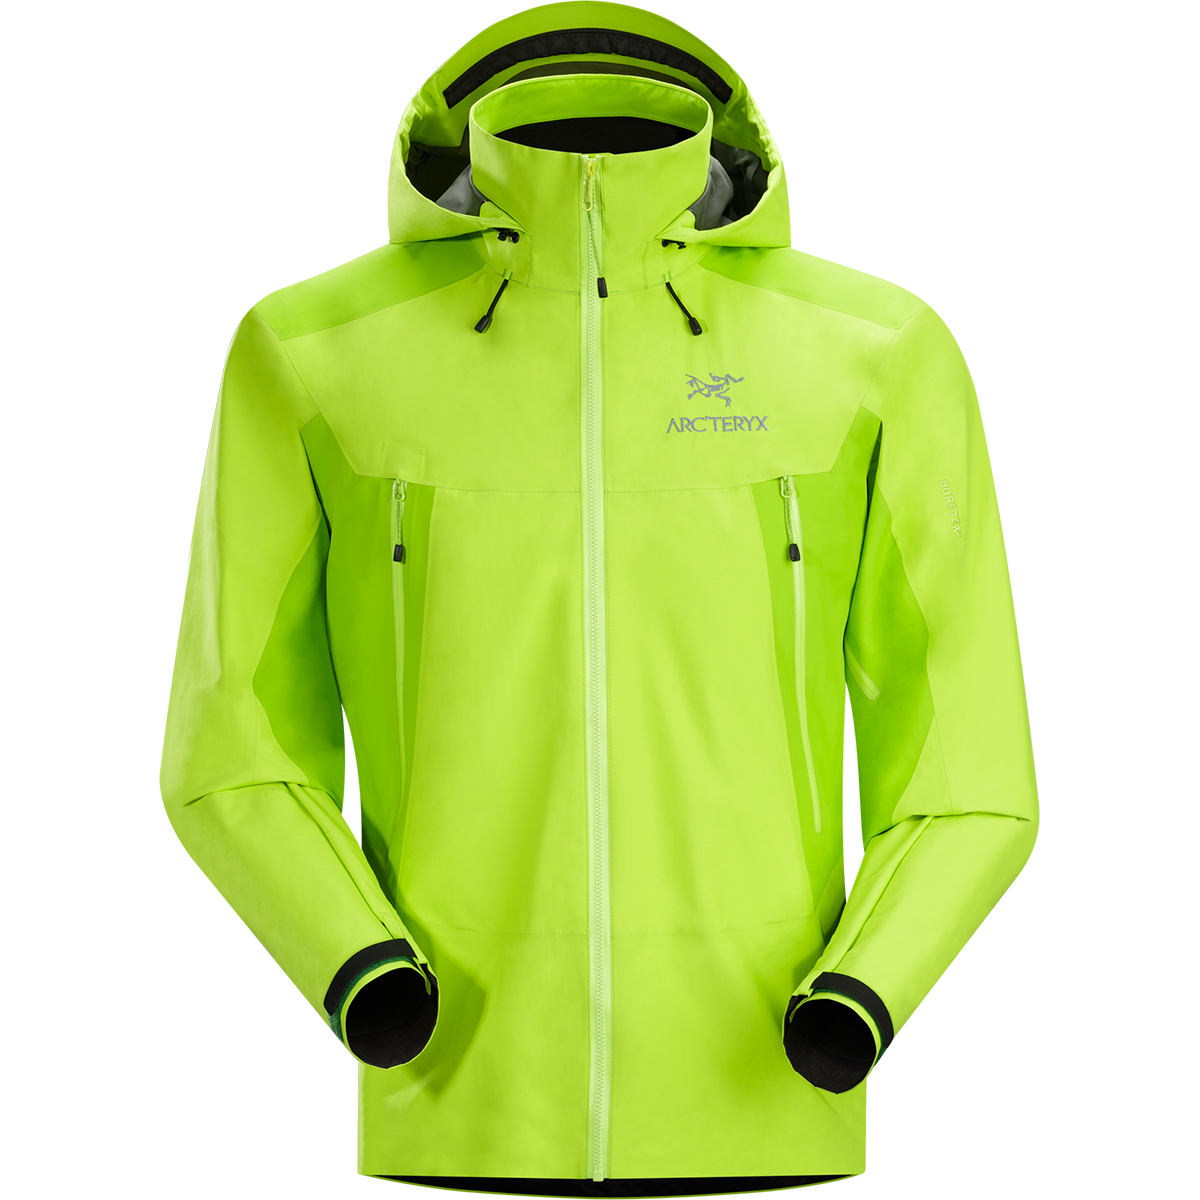 Arc'teryx Beta LT Hybrid Jacket, men's, discontinued Fall 2014 colors ...